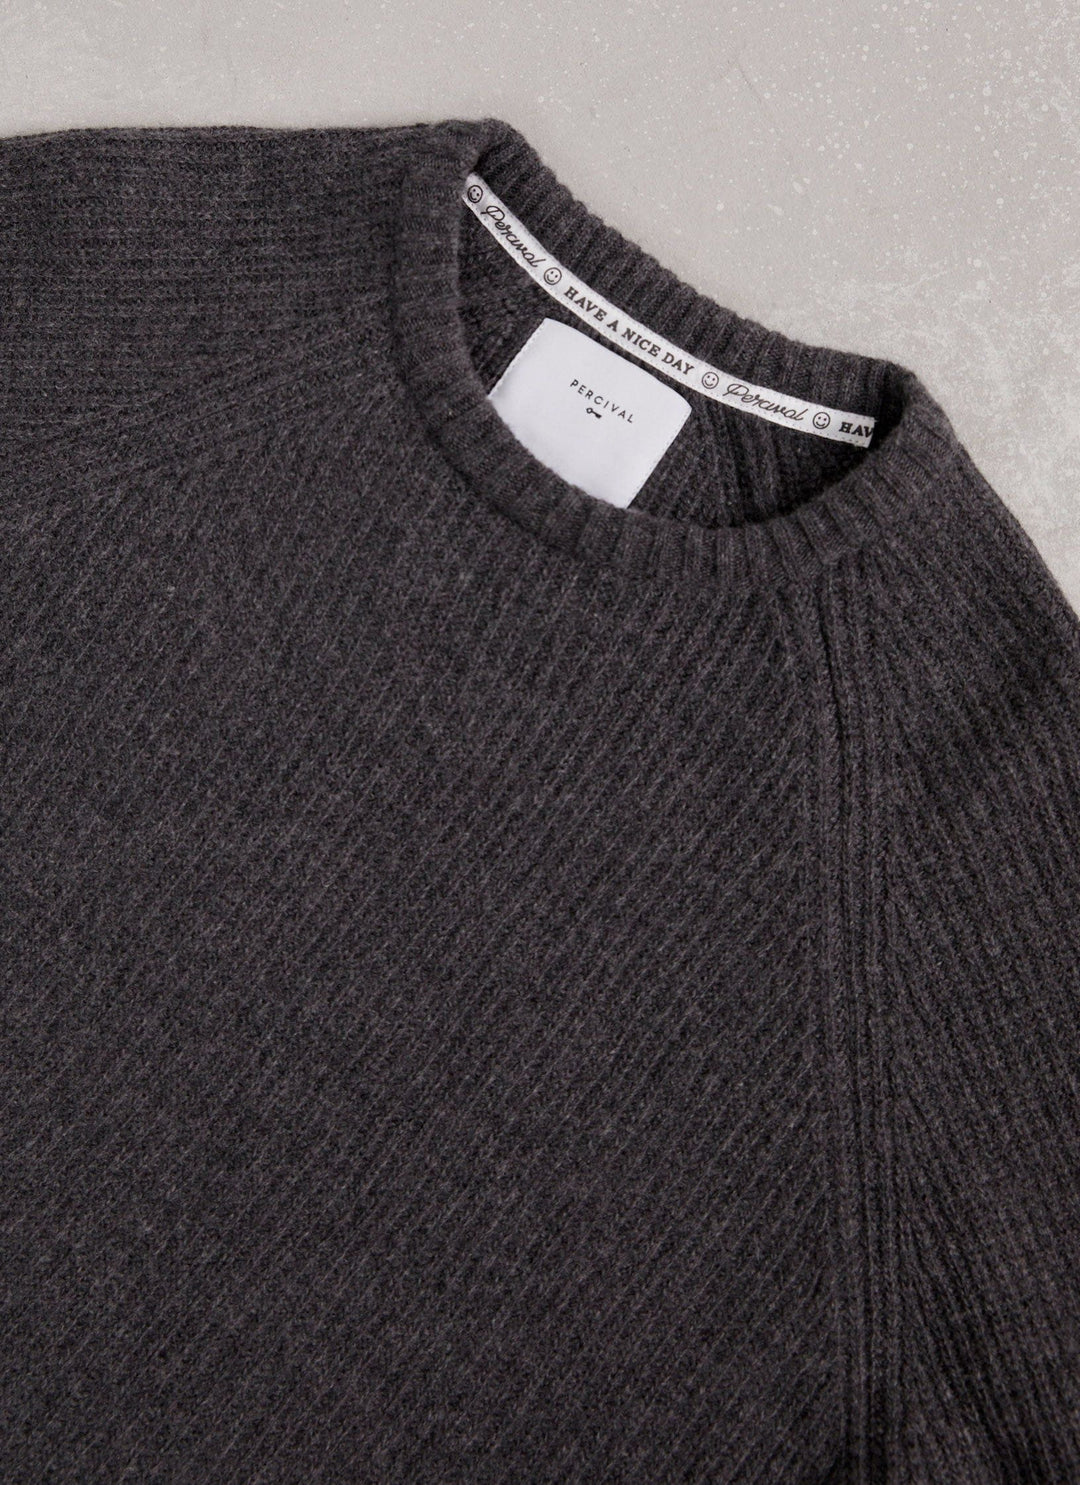 Men's Raglan Knit Wool Jumper | Charcoal Grey Knitted Sweater ...